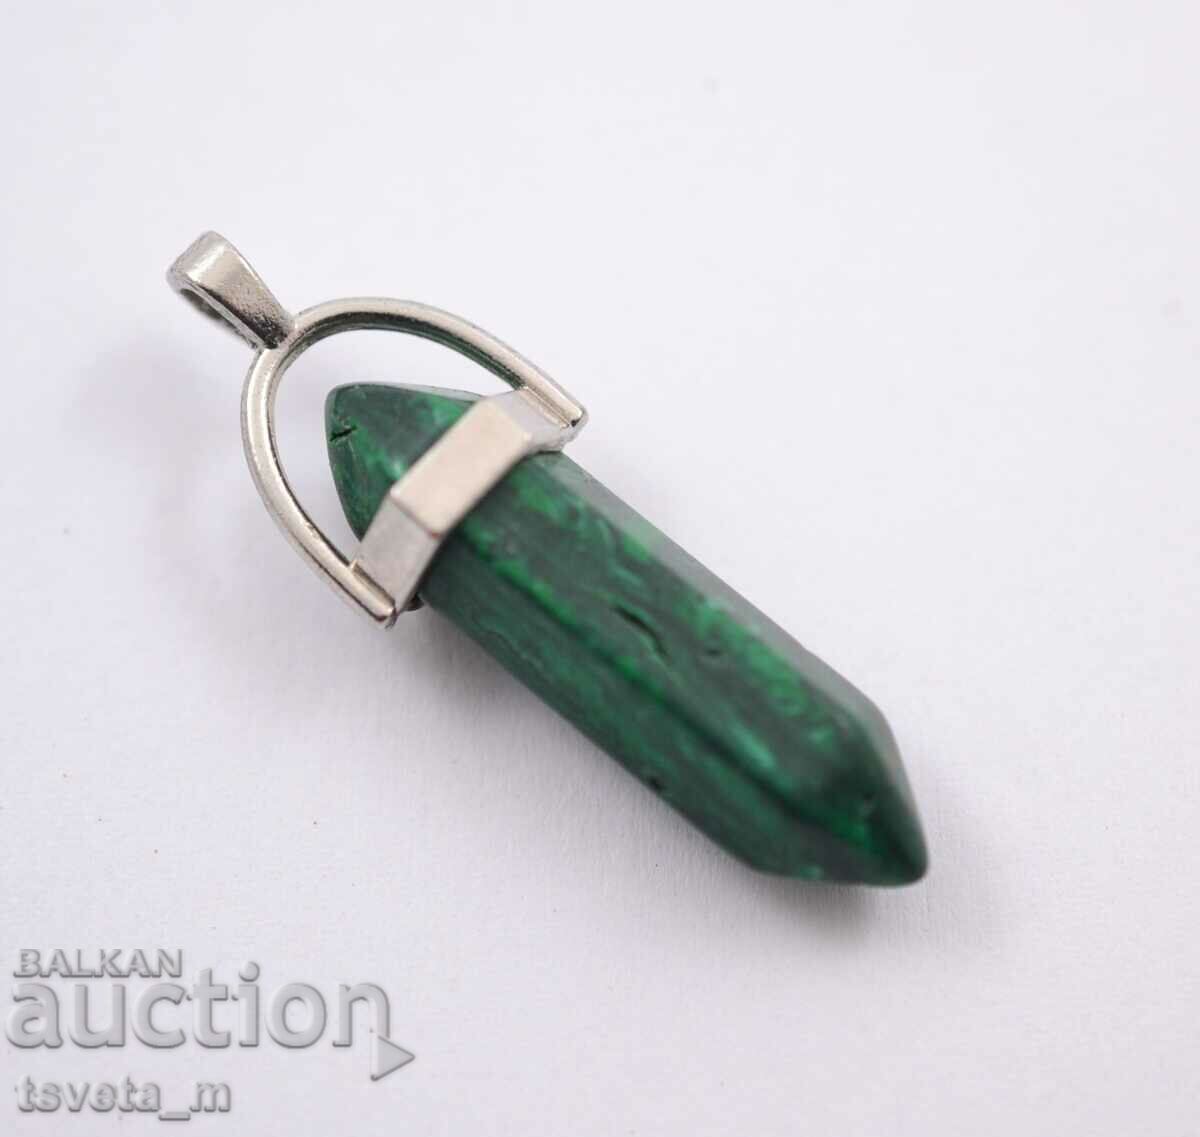 Locket, pendant with semi-precious stone